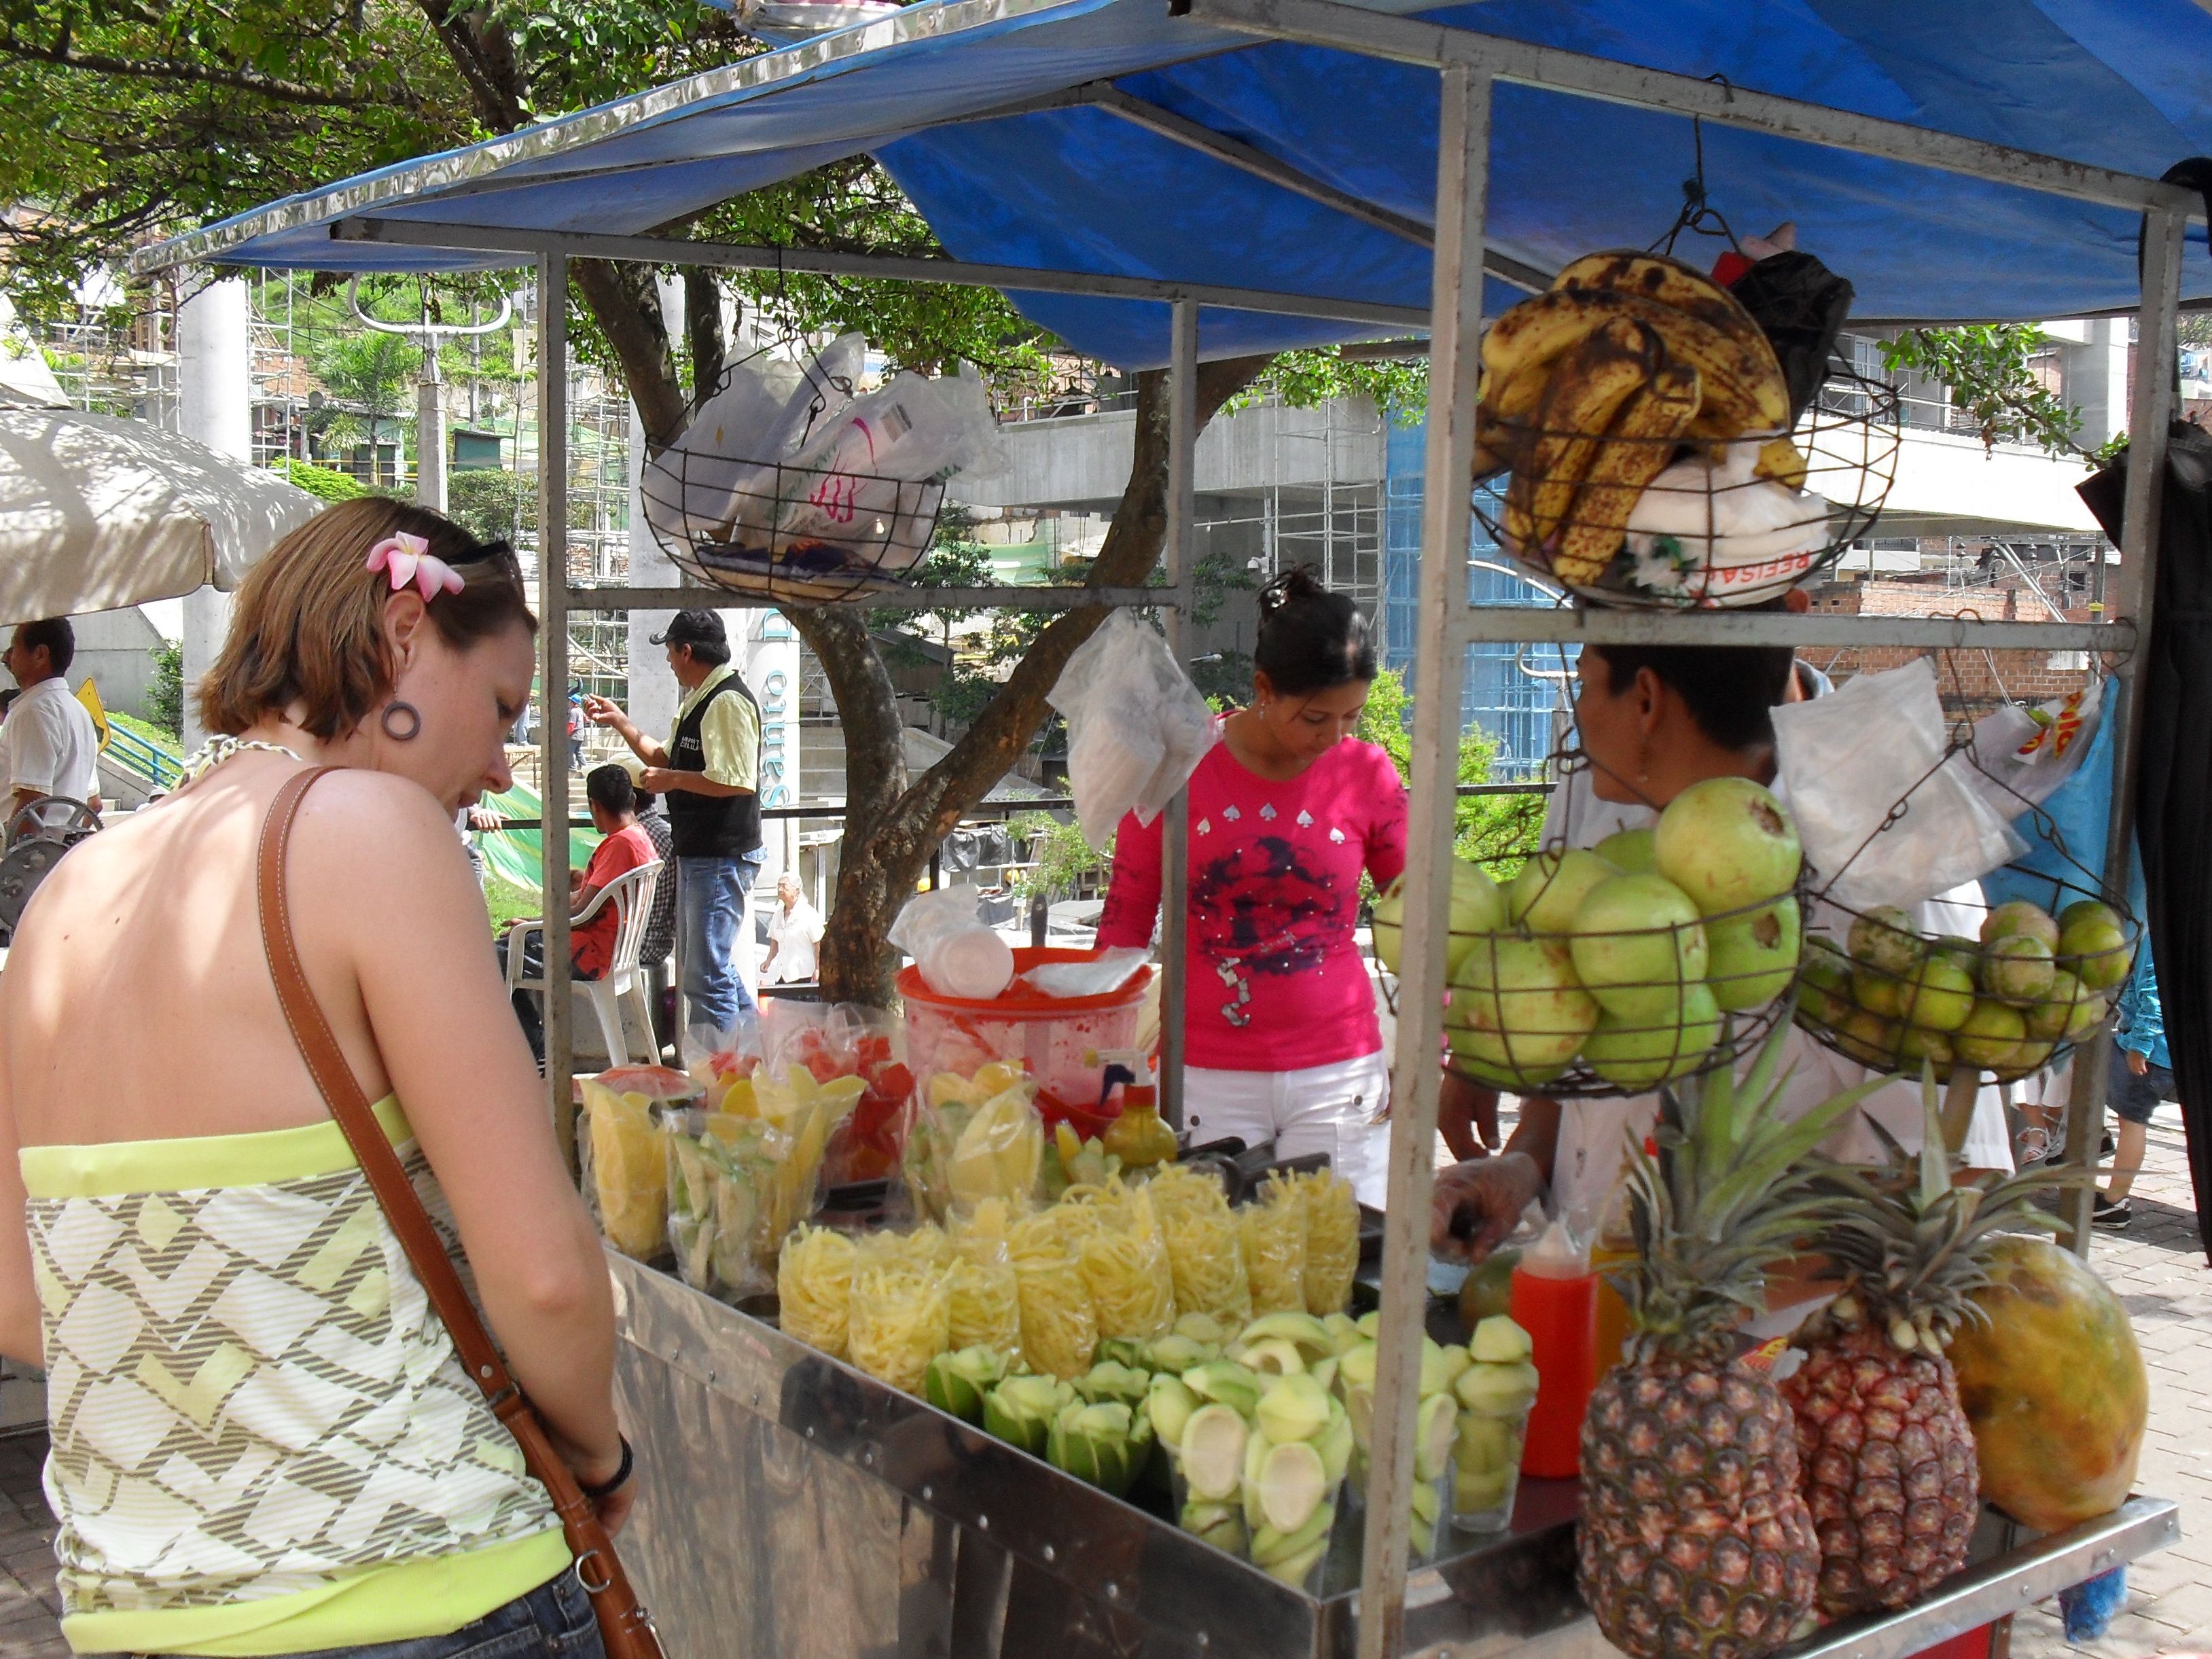 Kolumbien mit Kinder - Kolumbien for family - Obstmarkt